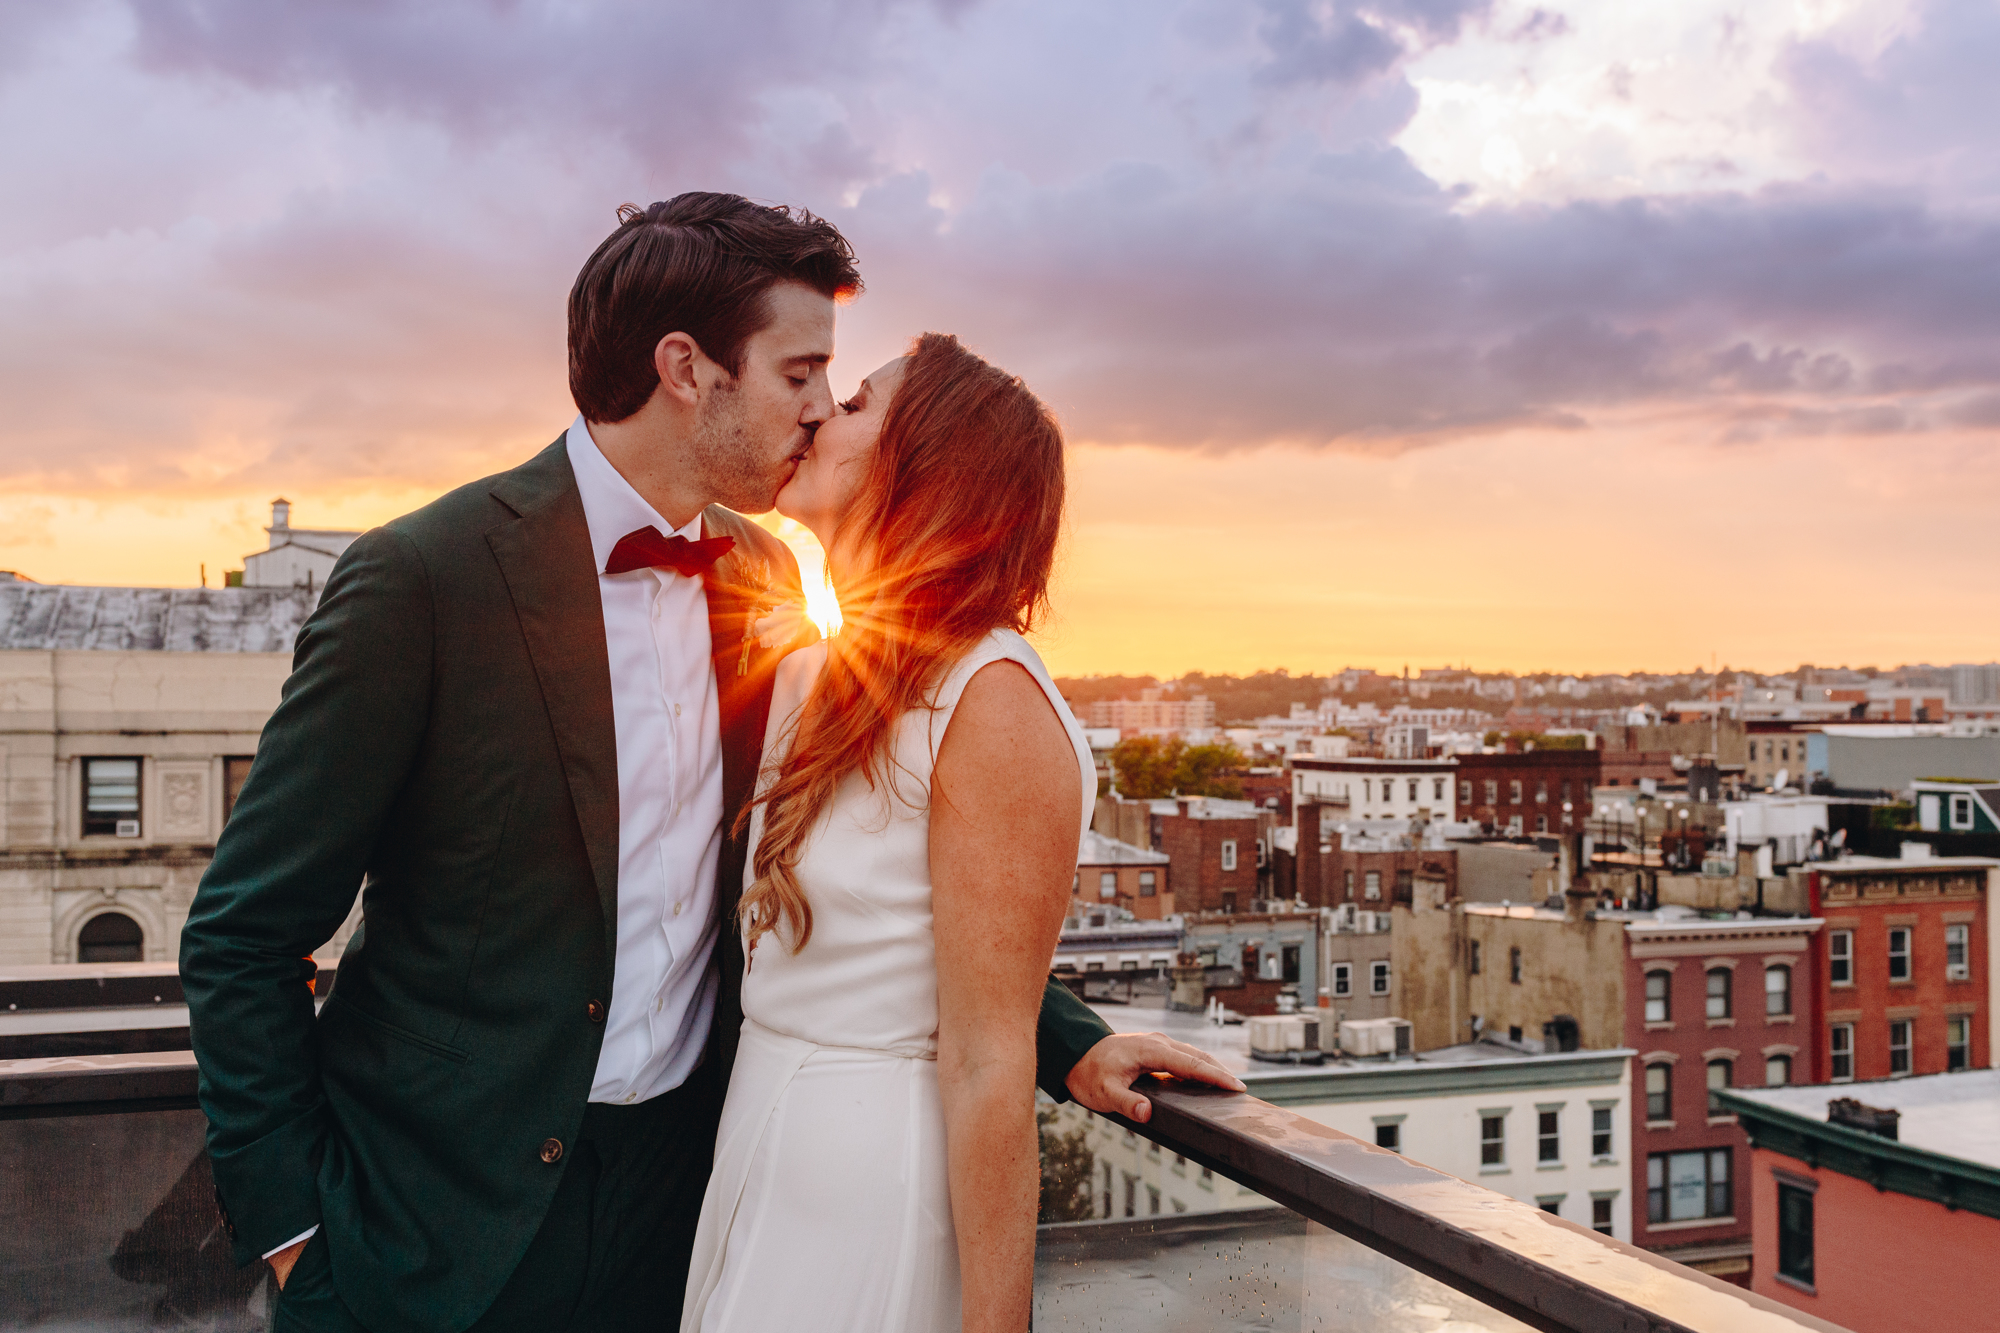 Sunset wedding photos in Hoboken NJ